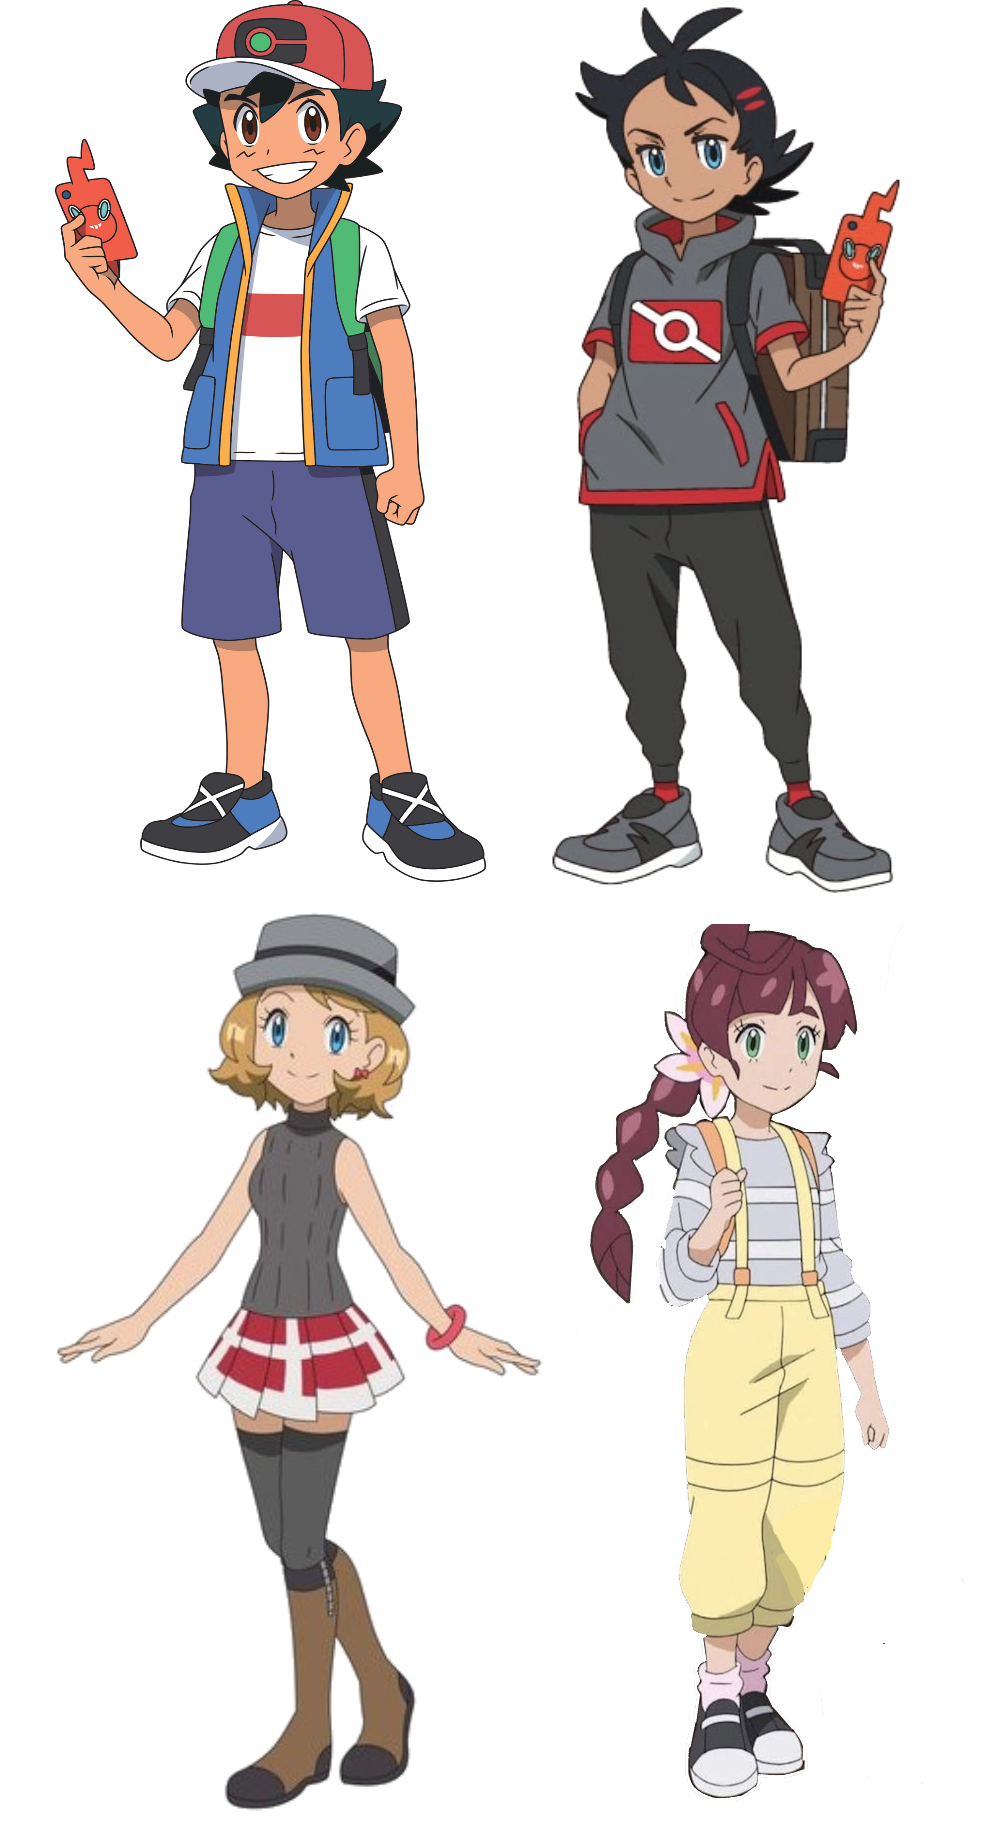 Pokemon anime 2022 characters 1 by Orcadude on DeviantArt